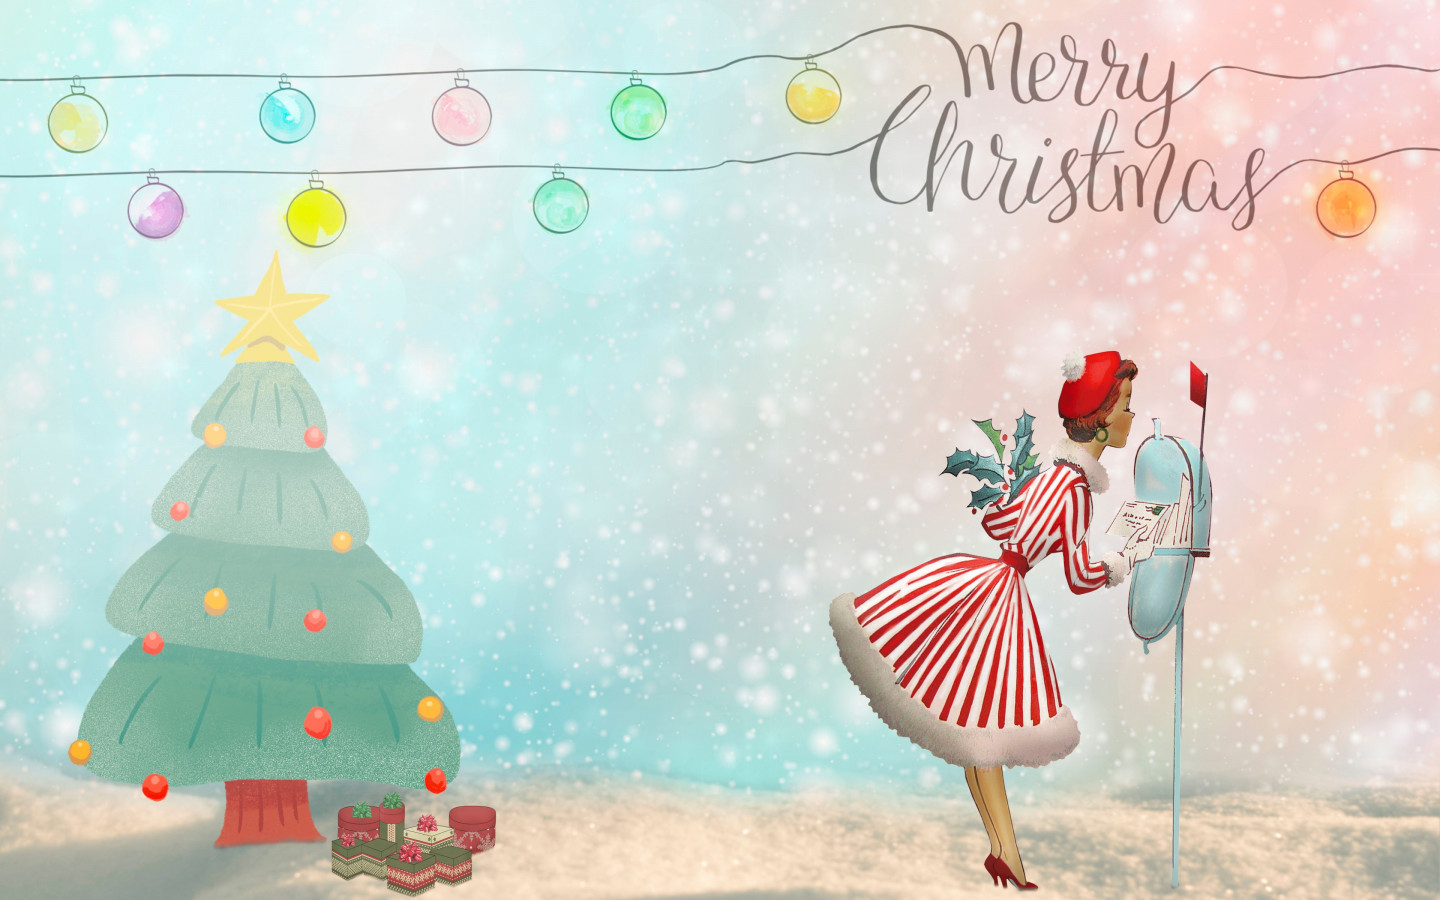 Merry Christmas 2020 Illustration wallpaper 1440x900